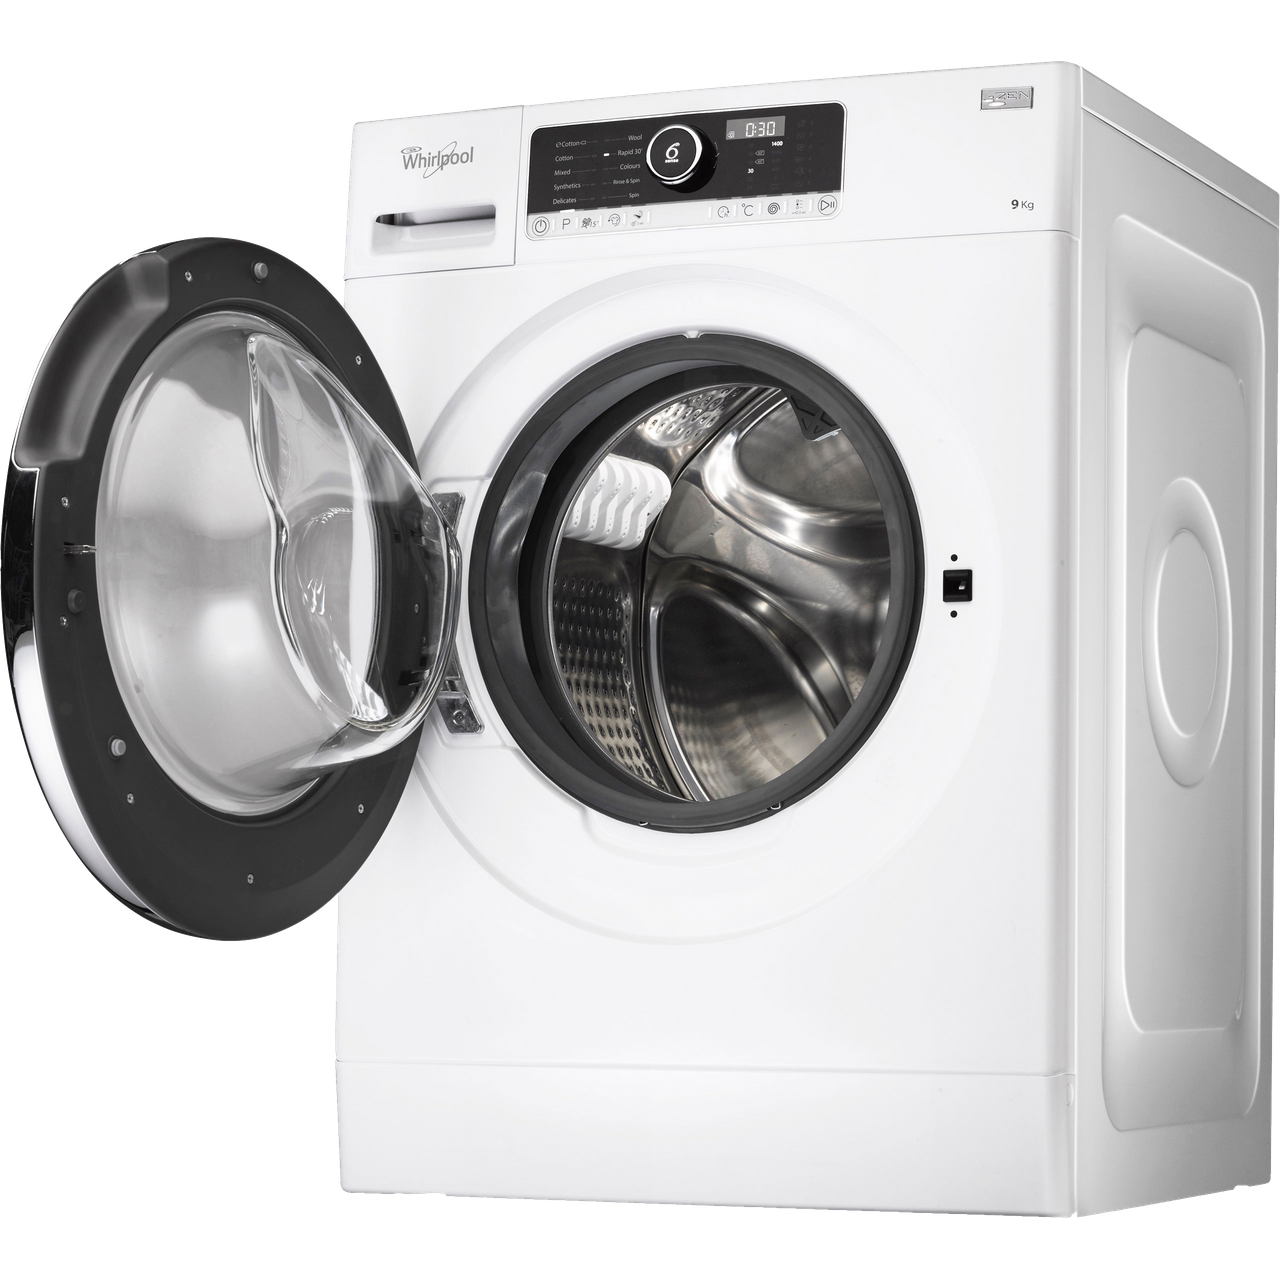 Whirlpool FSCR90420 9Kg Washing Machine with 1400 rpm specs